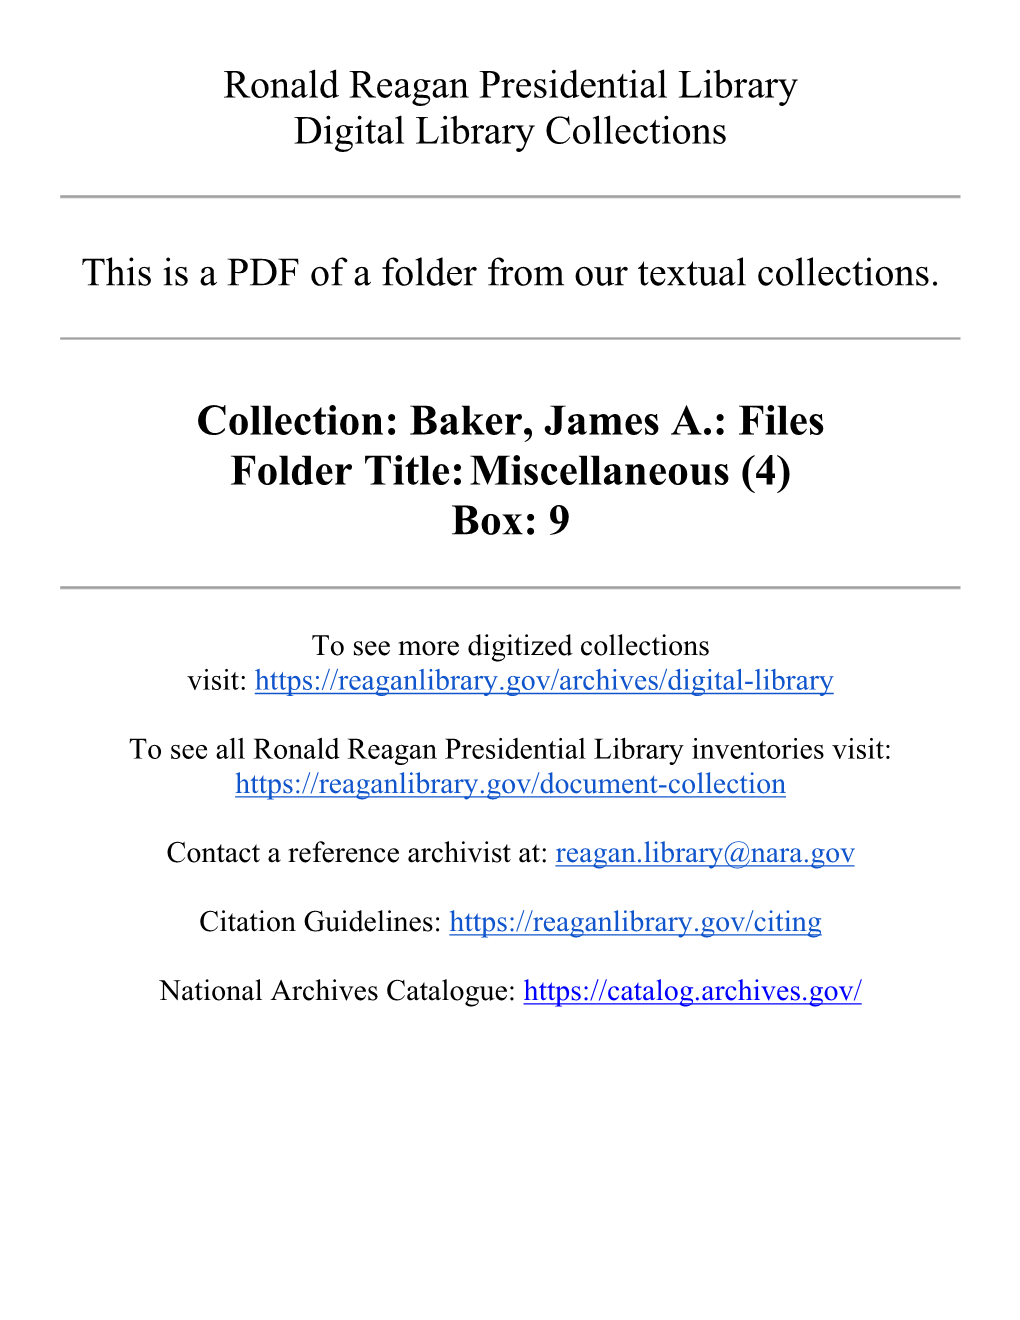 Baker, James A.: Files Folder Title: Miscellaneous (4) Box: 9